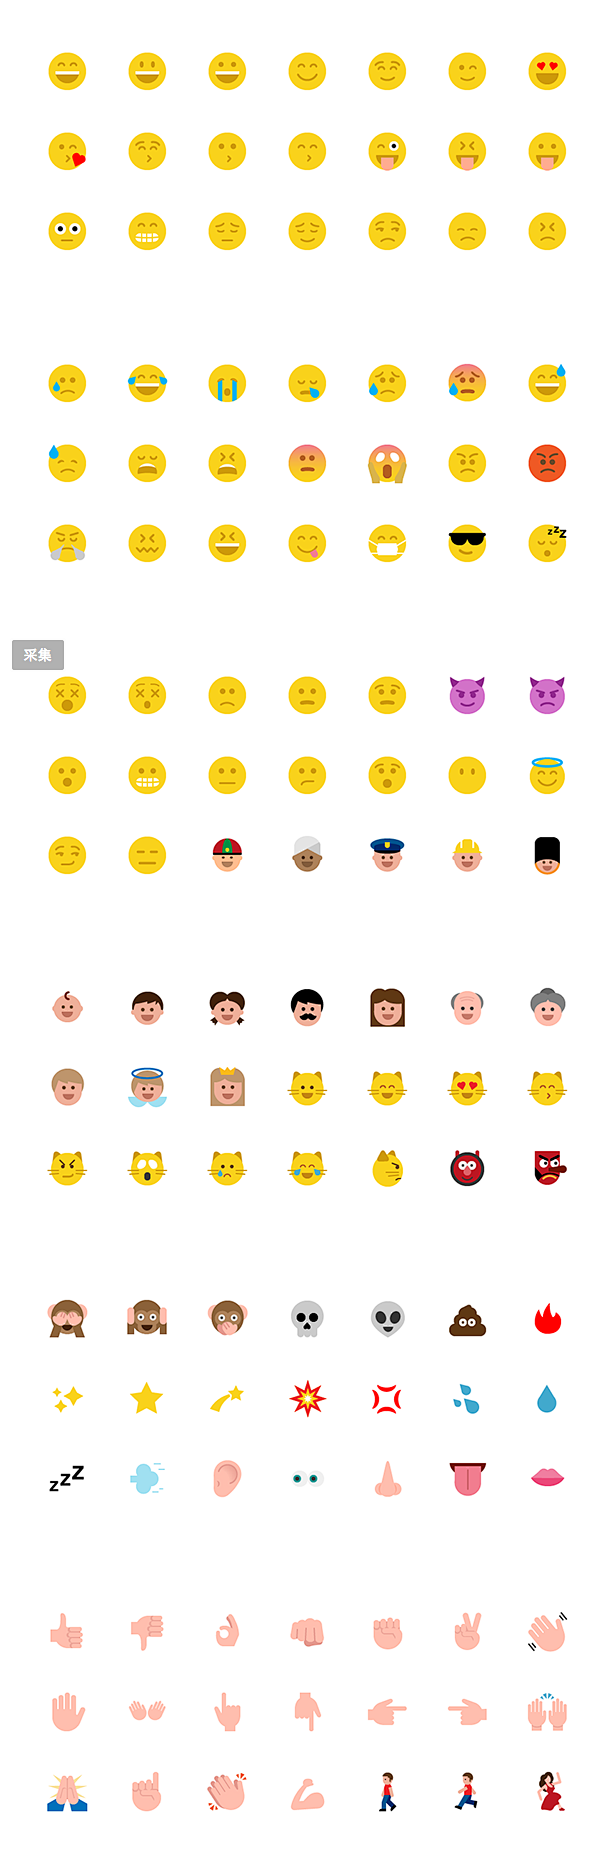 The emoji redesign p...